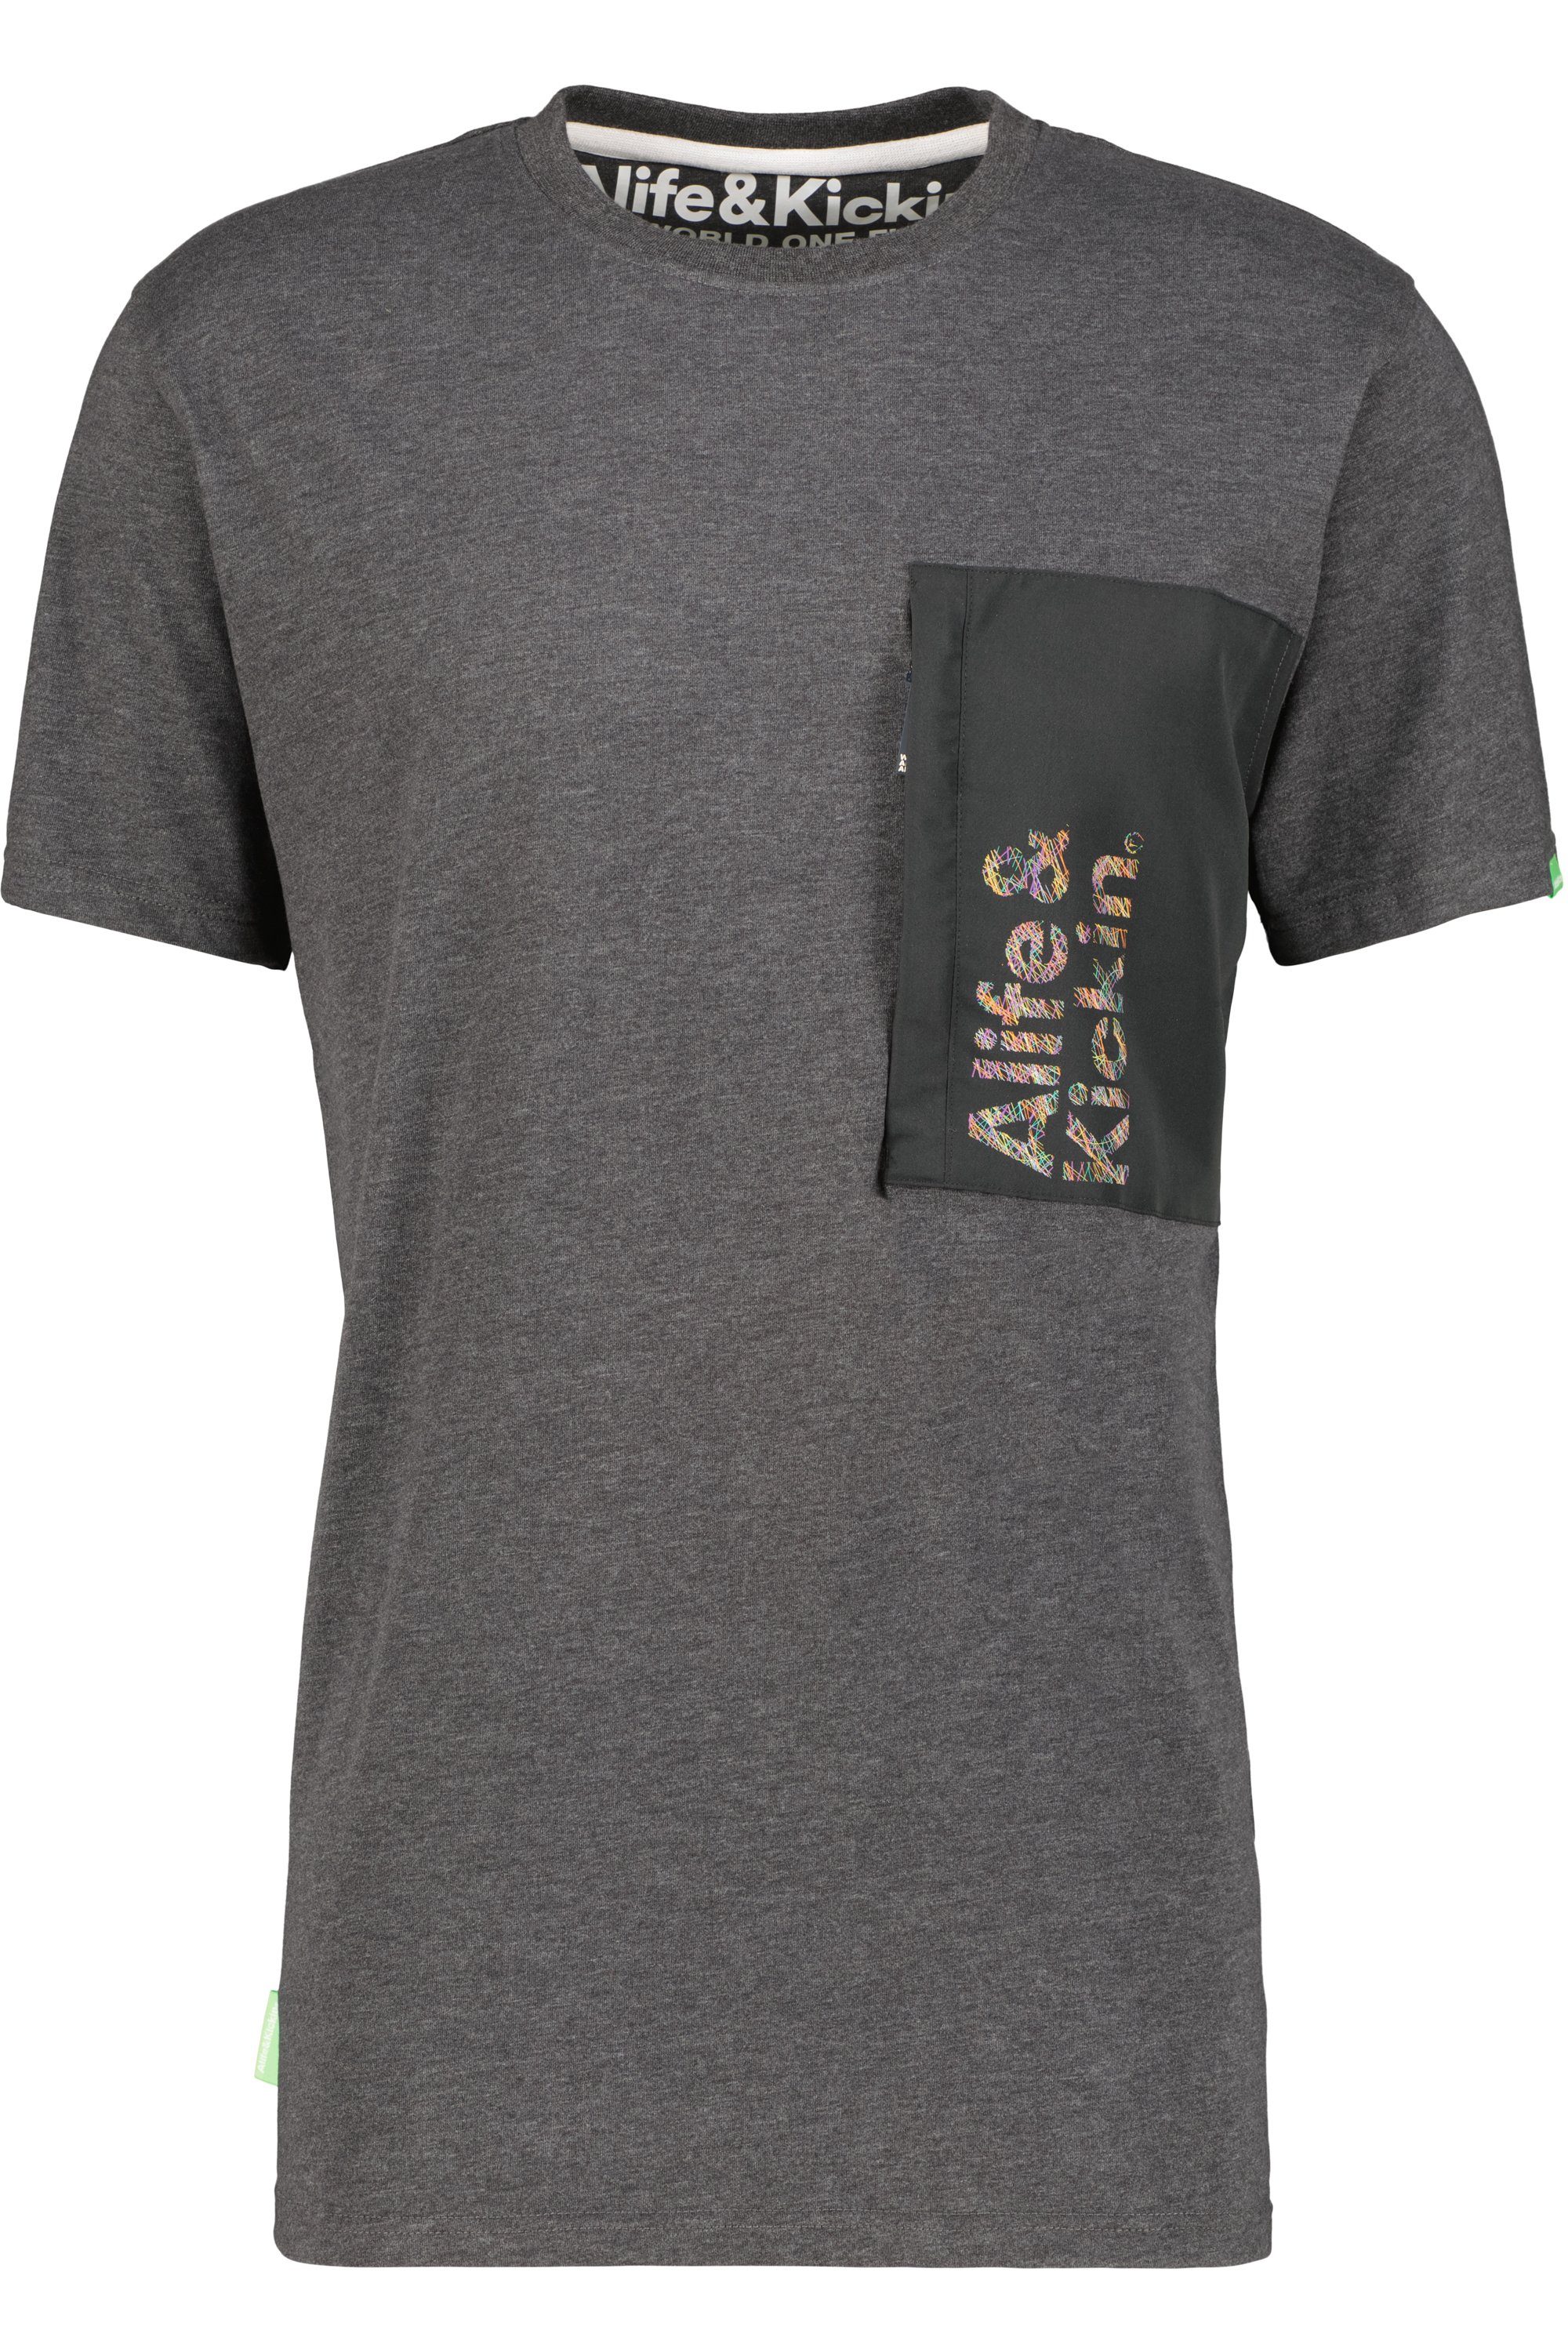 Alife & Kickin RossAK T-Shirt Herren T-Shirt Shirt moonless